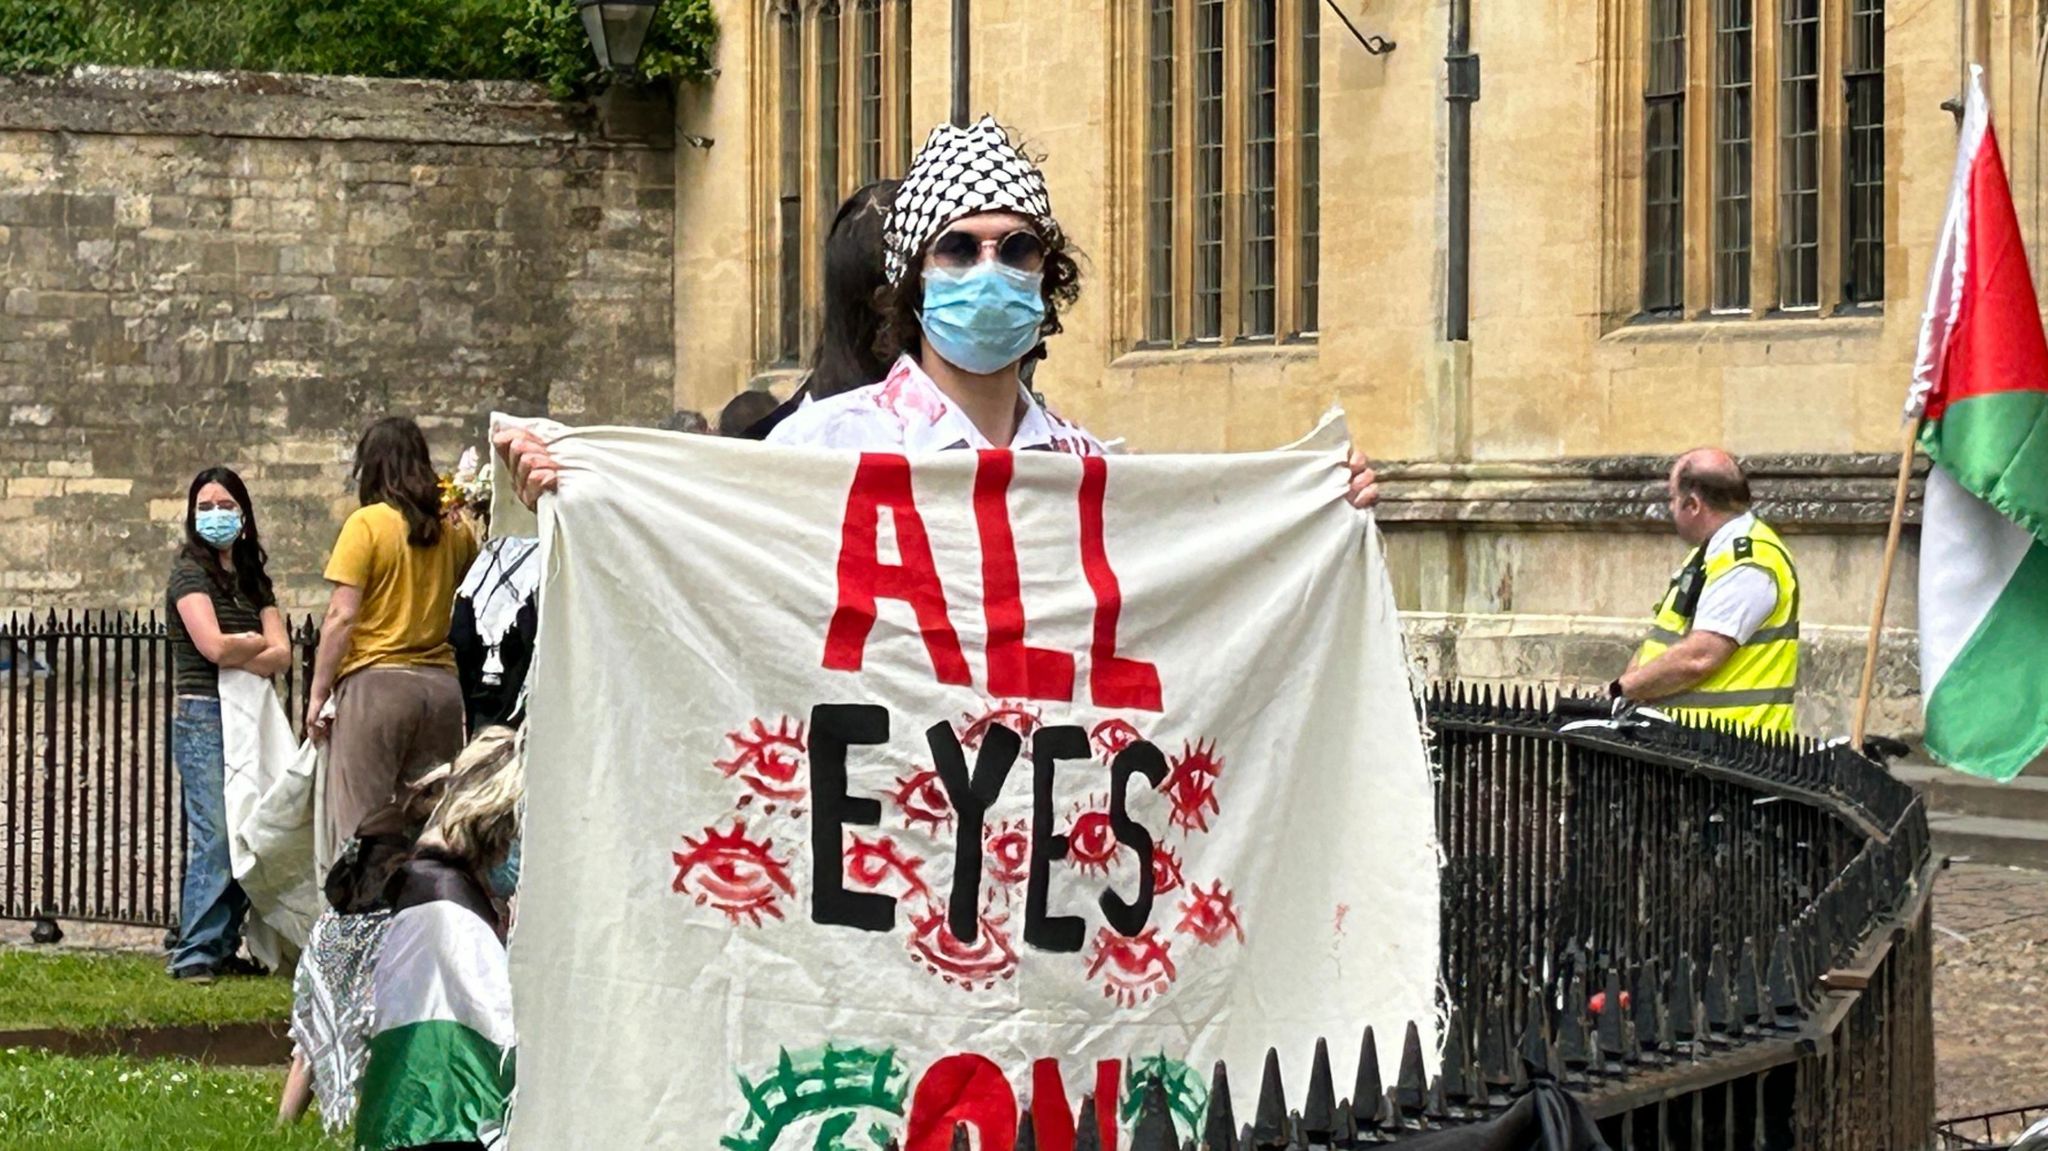 Protester hiding face holding pro-Gaza banner